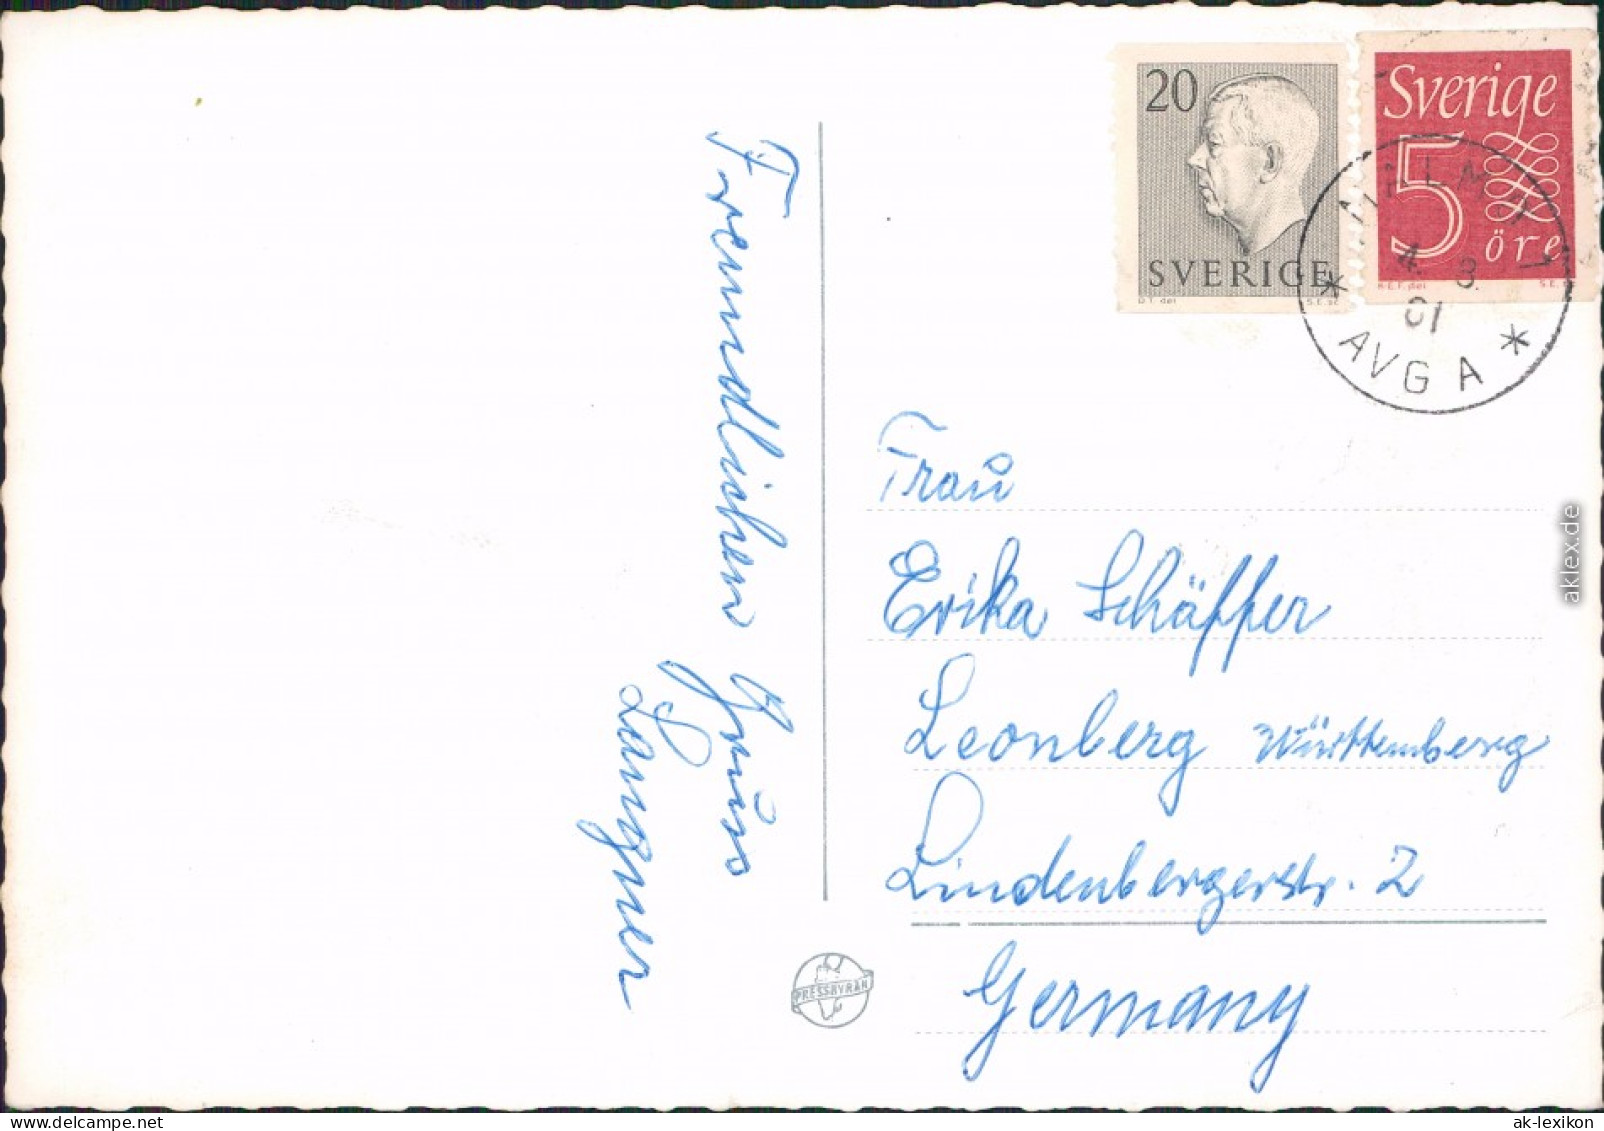 Postcard Malmö Motiv Fran Slottsparken 1964 - Suède